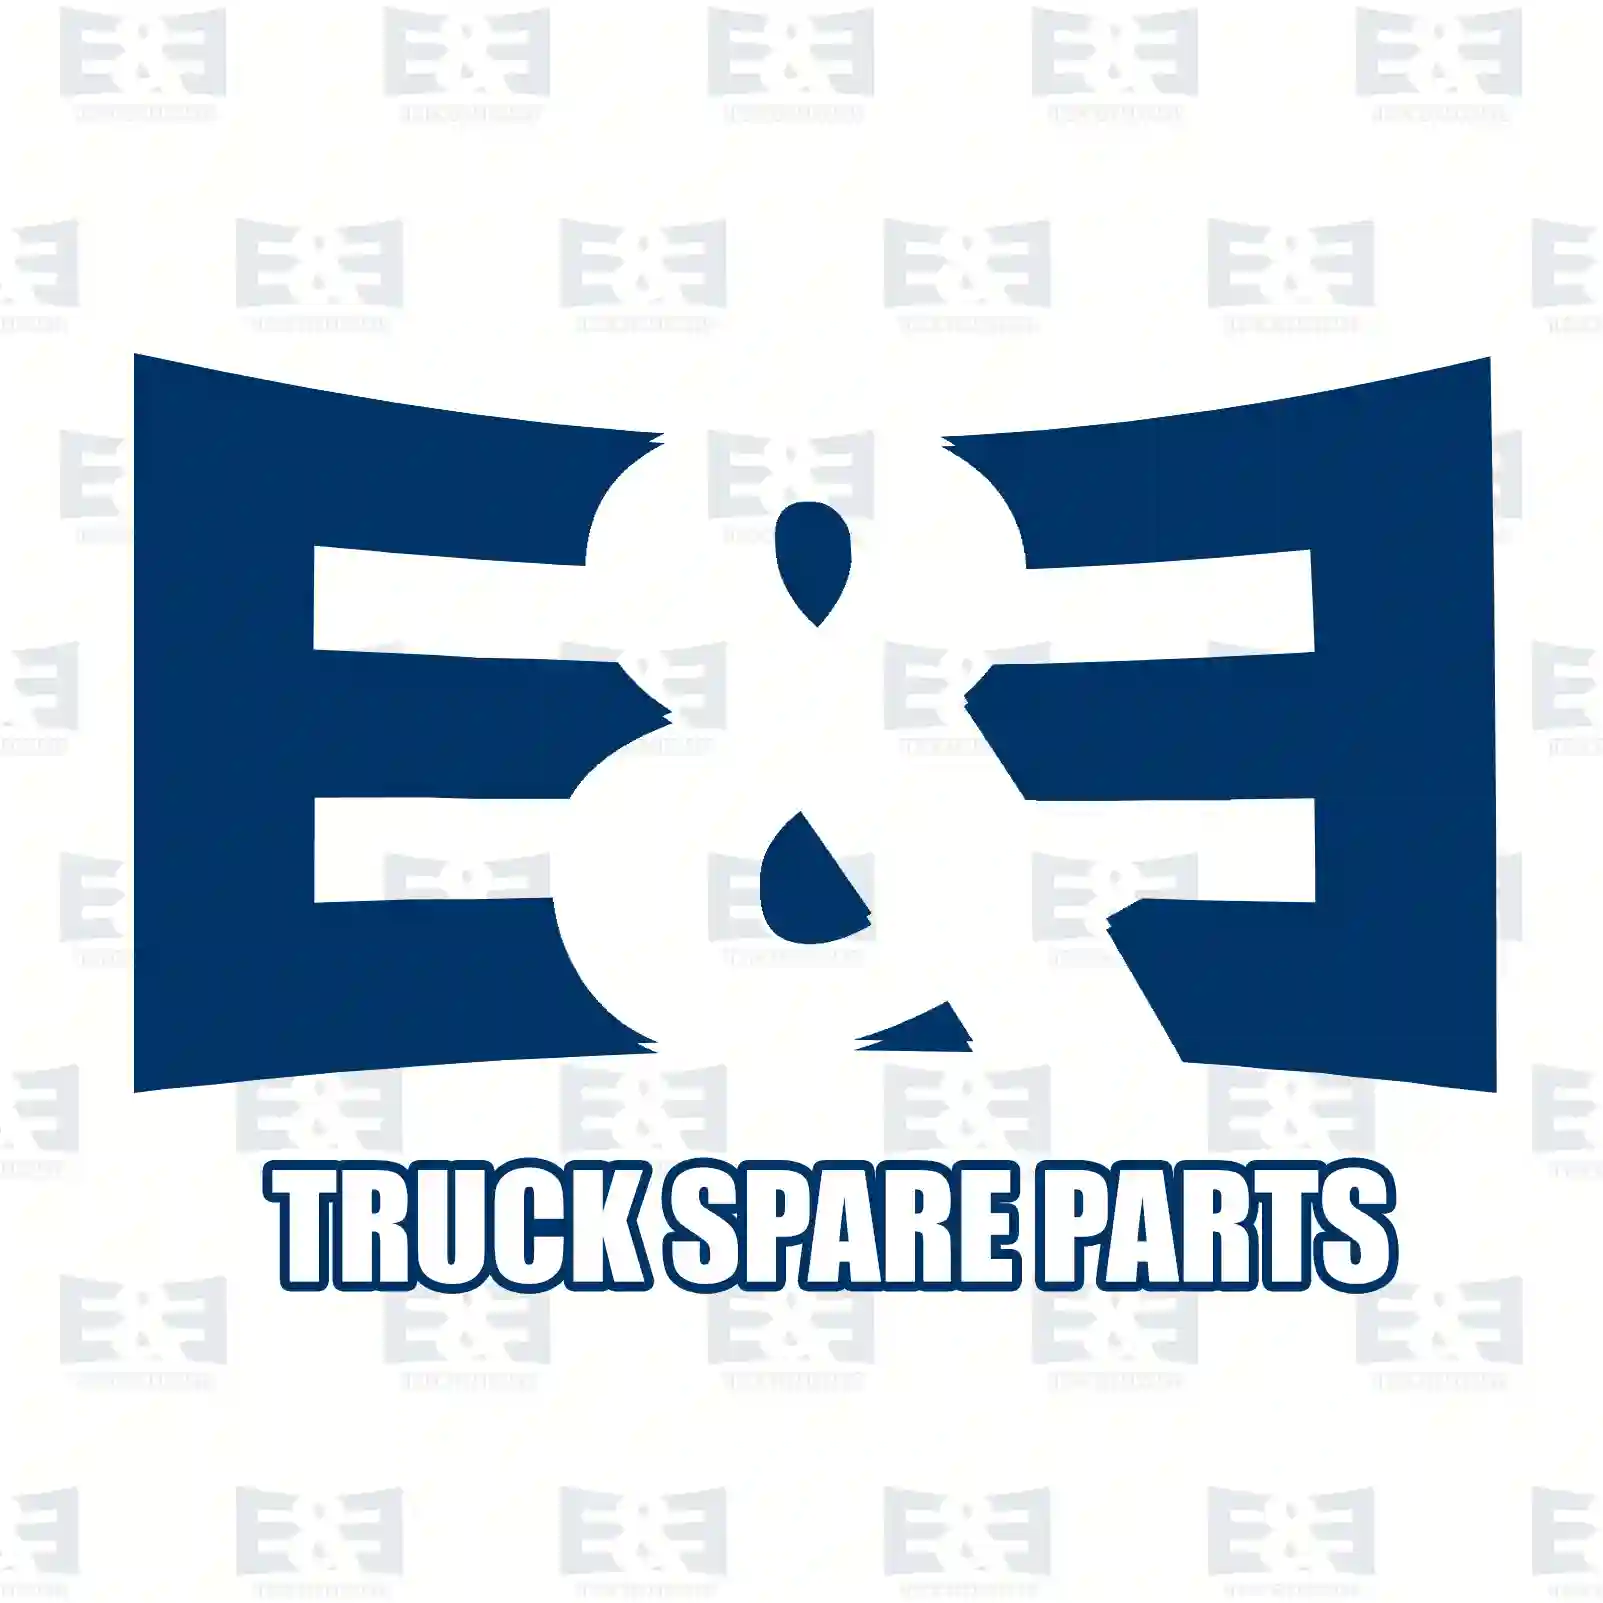 Drum brake lining kit, axle kit, 2E2293461, 1057006000, 1057006100, 1057306000, 1057306100, 3057006000, 3057306000, 3057396000 ||  2E2293461 E&E Truck Spare Parts | Truck Spare Parts, Auotomotive Spare Parts Drum brake lining kit, axle kit, 2E2293461, 1057006000, 1057006100, 1057306000, 1057306100, 3057006000, 3057306000, 3057396000 ||  2E2293461 E&E Truck Spare Parts | Truck Spare Parts, Auotomotive Spare Parts